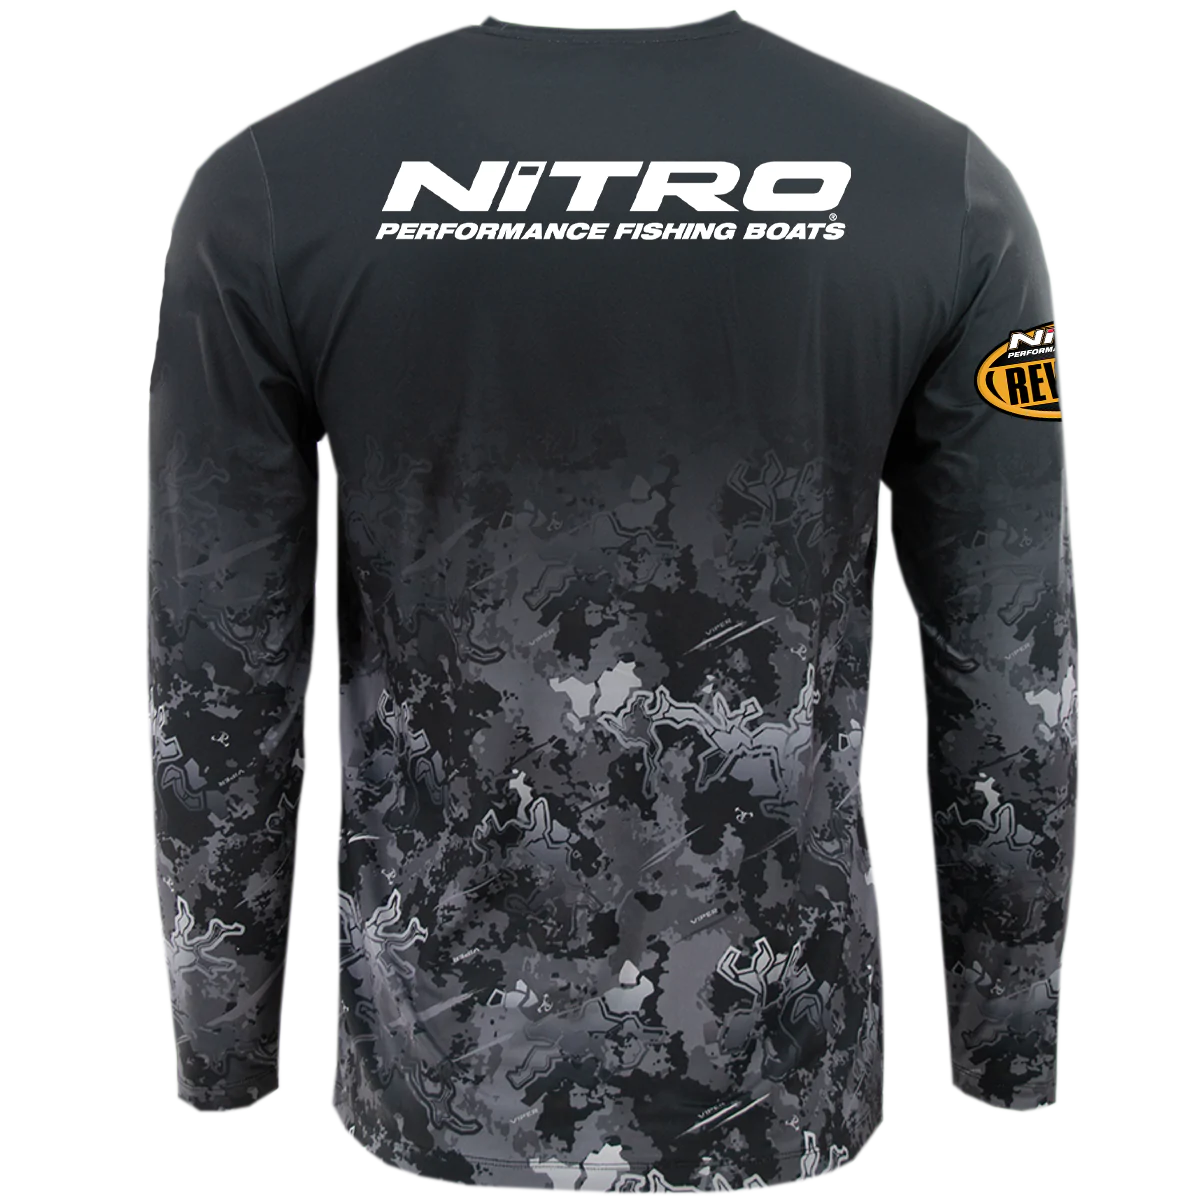 Nitro Rewards LS Performance Shirt-Viper Urban